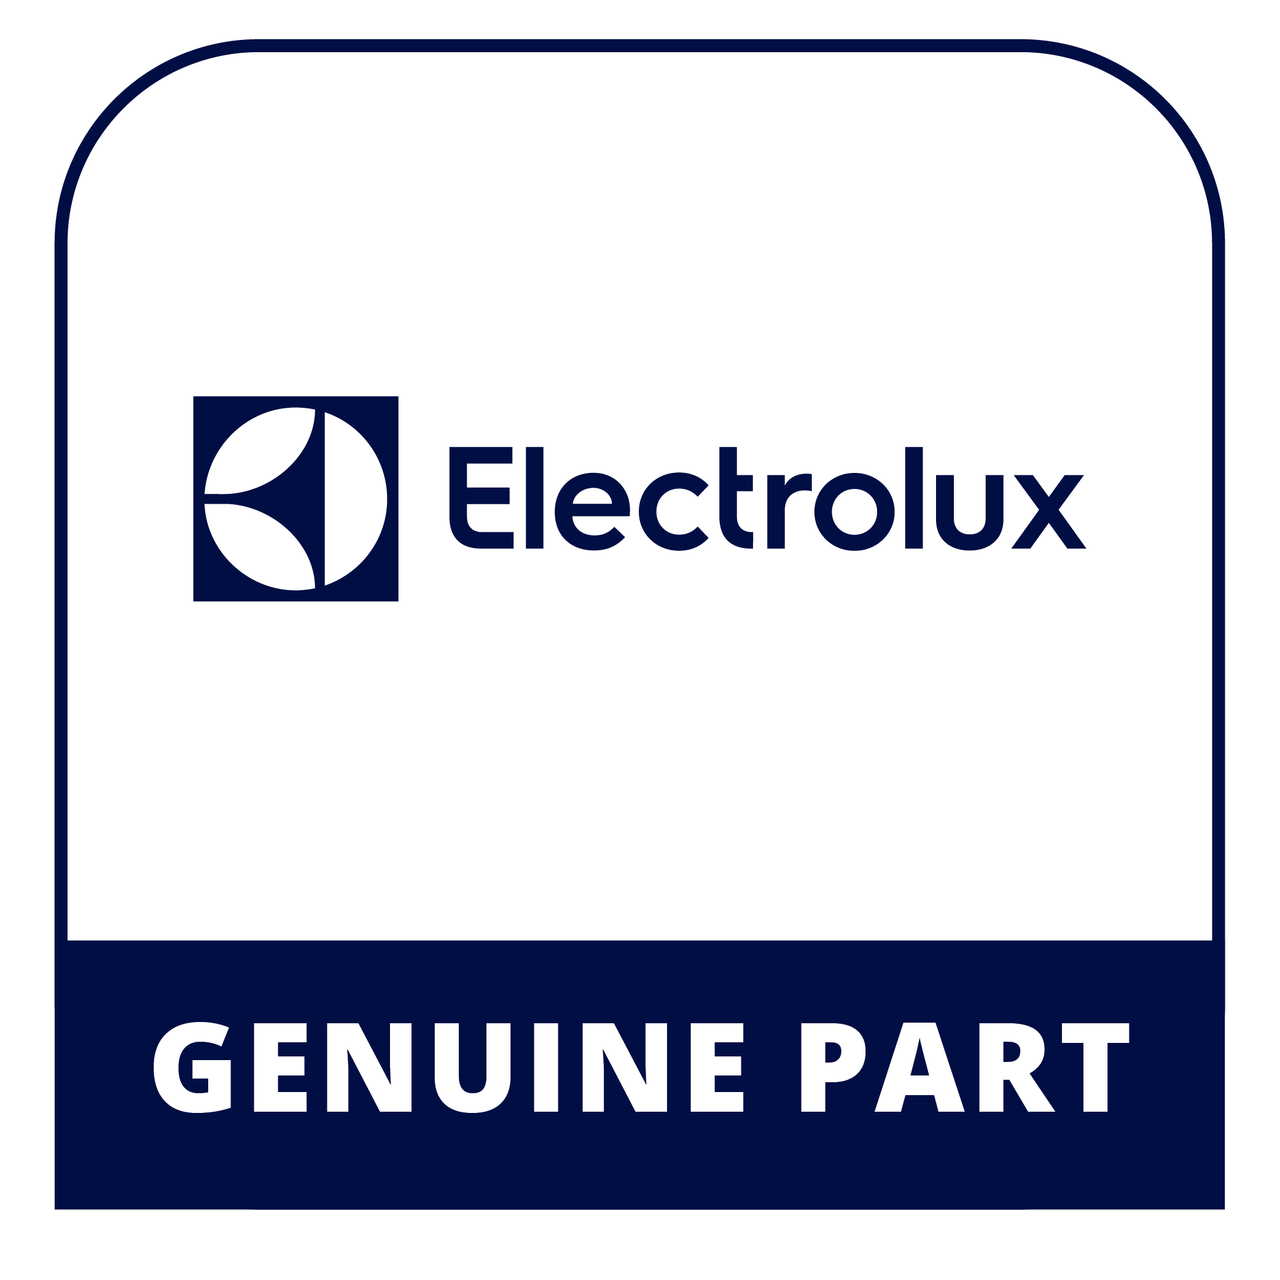 Frigidaire - Electrolux 5303918406 Evaporator Kit - Genuine Electrolux Part